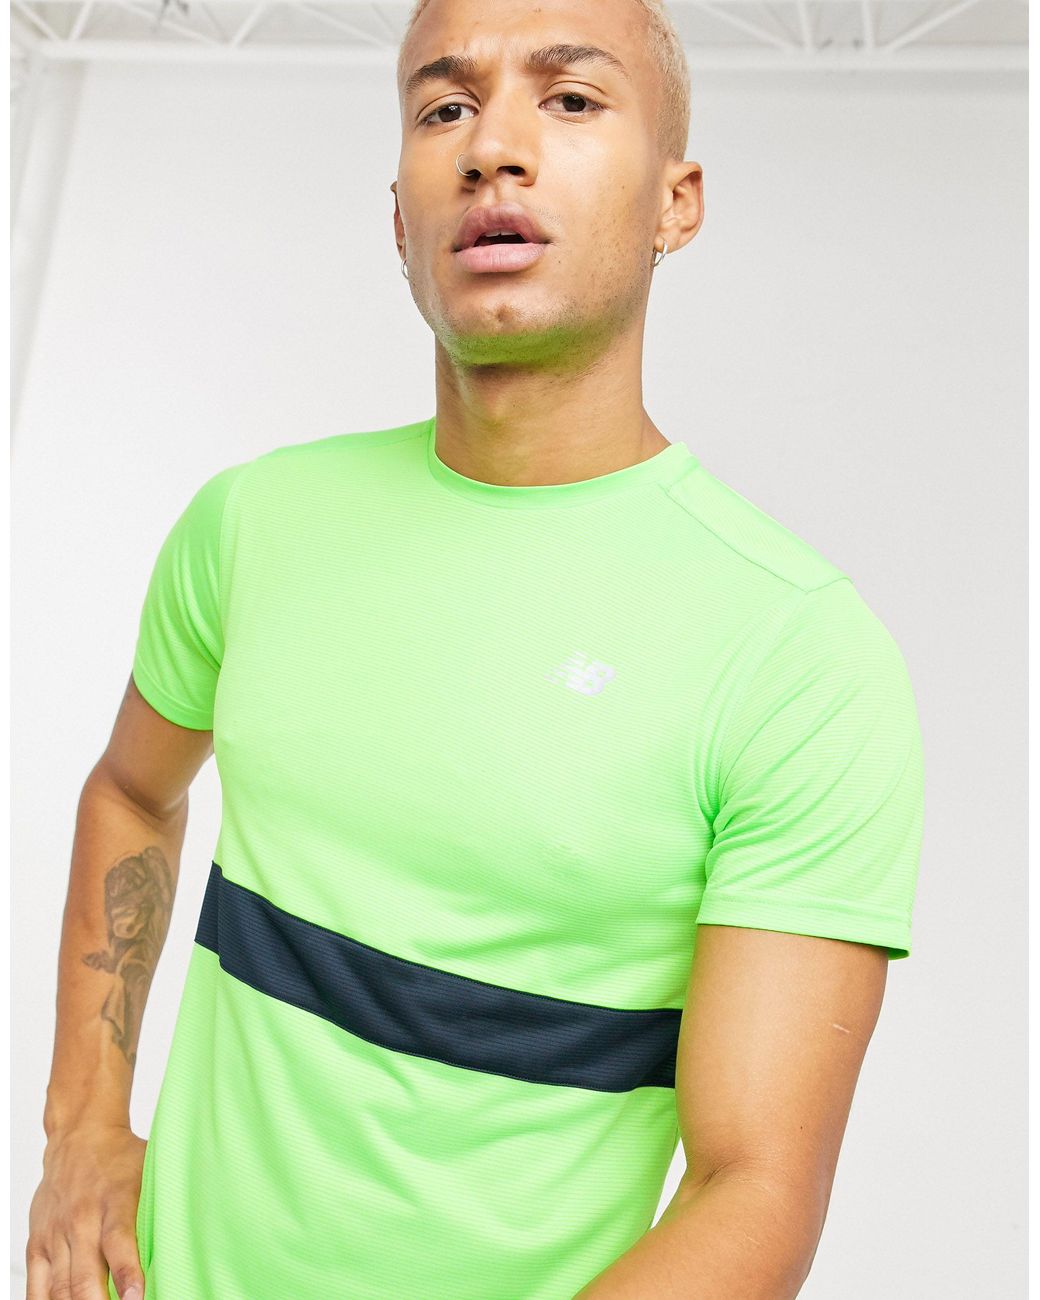 New Balance Running Accelerate T-shirt in Green for Men - Lyst